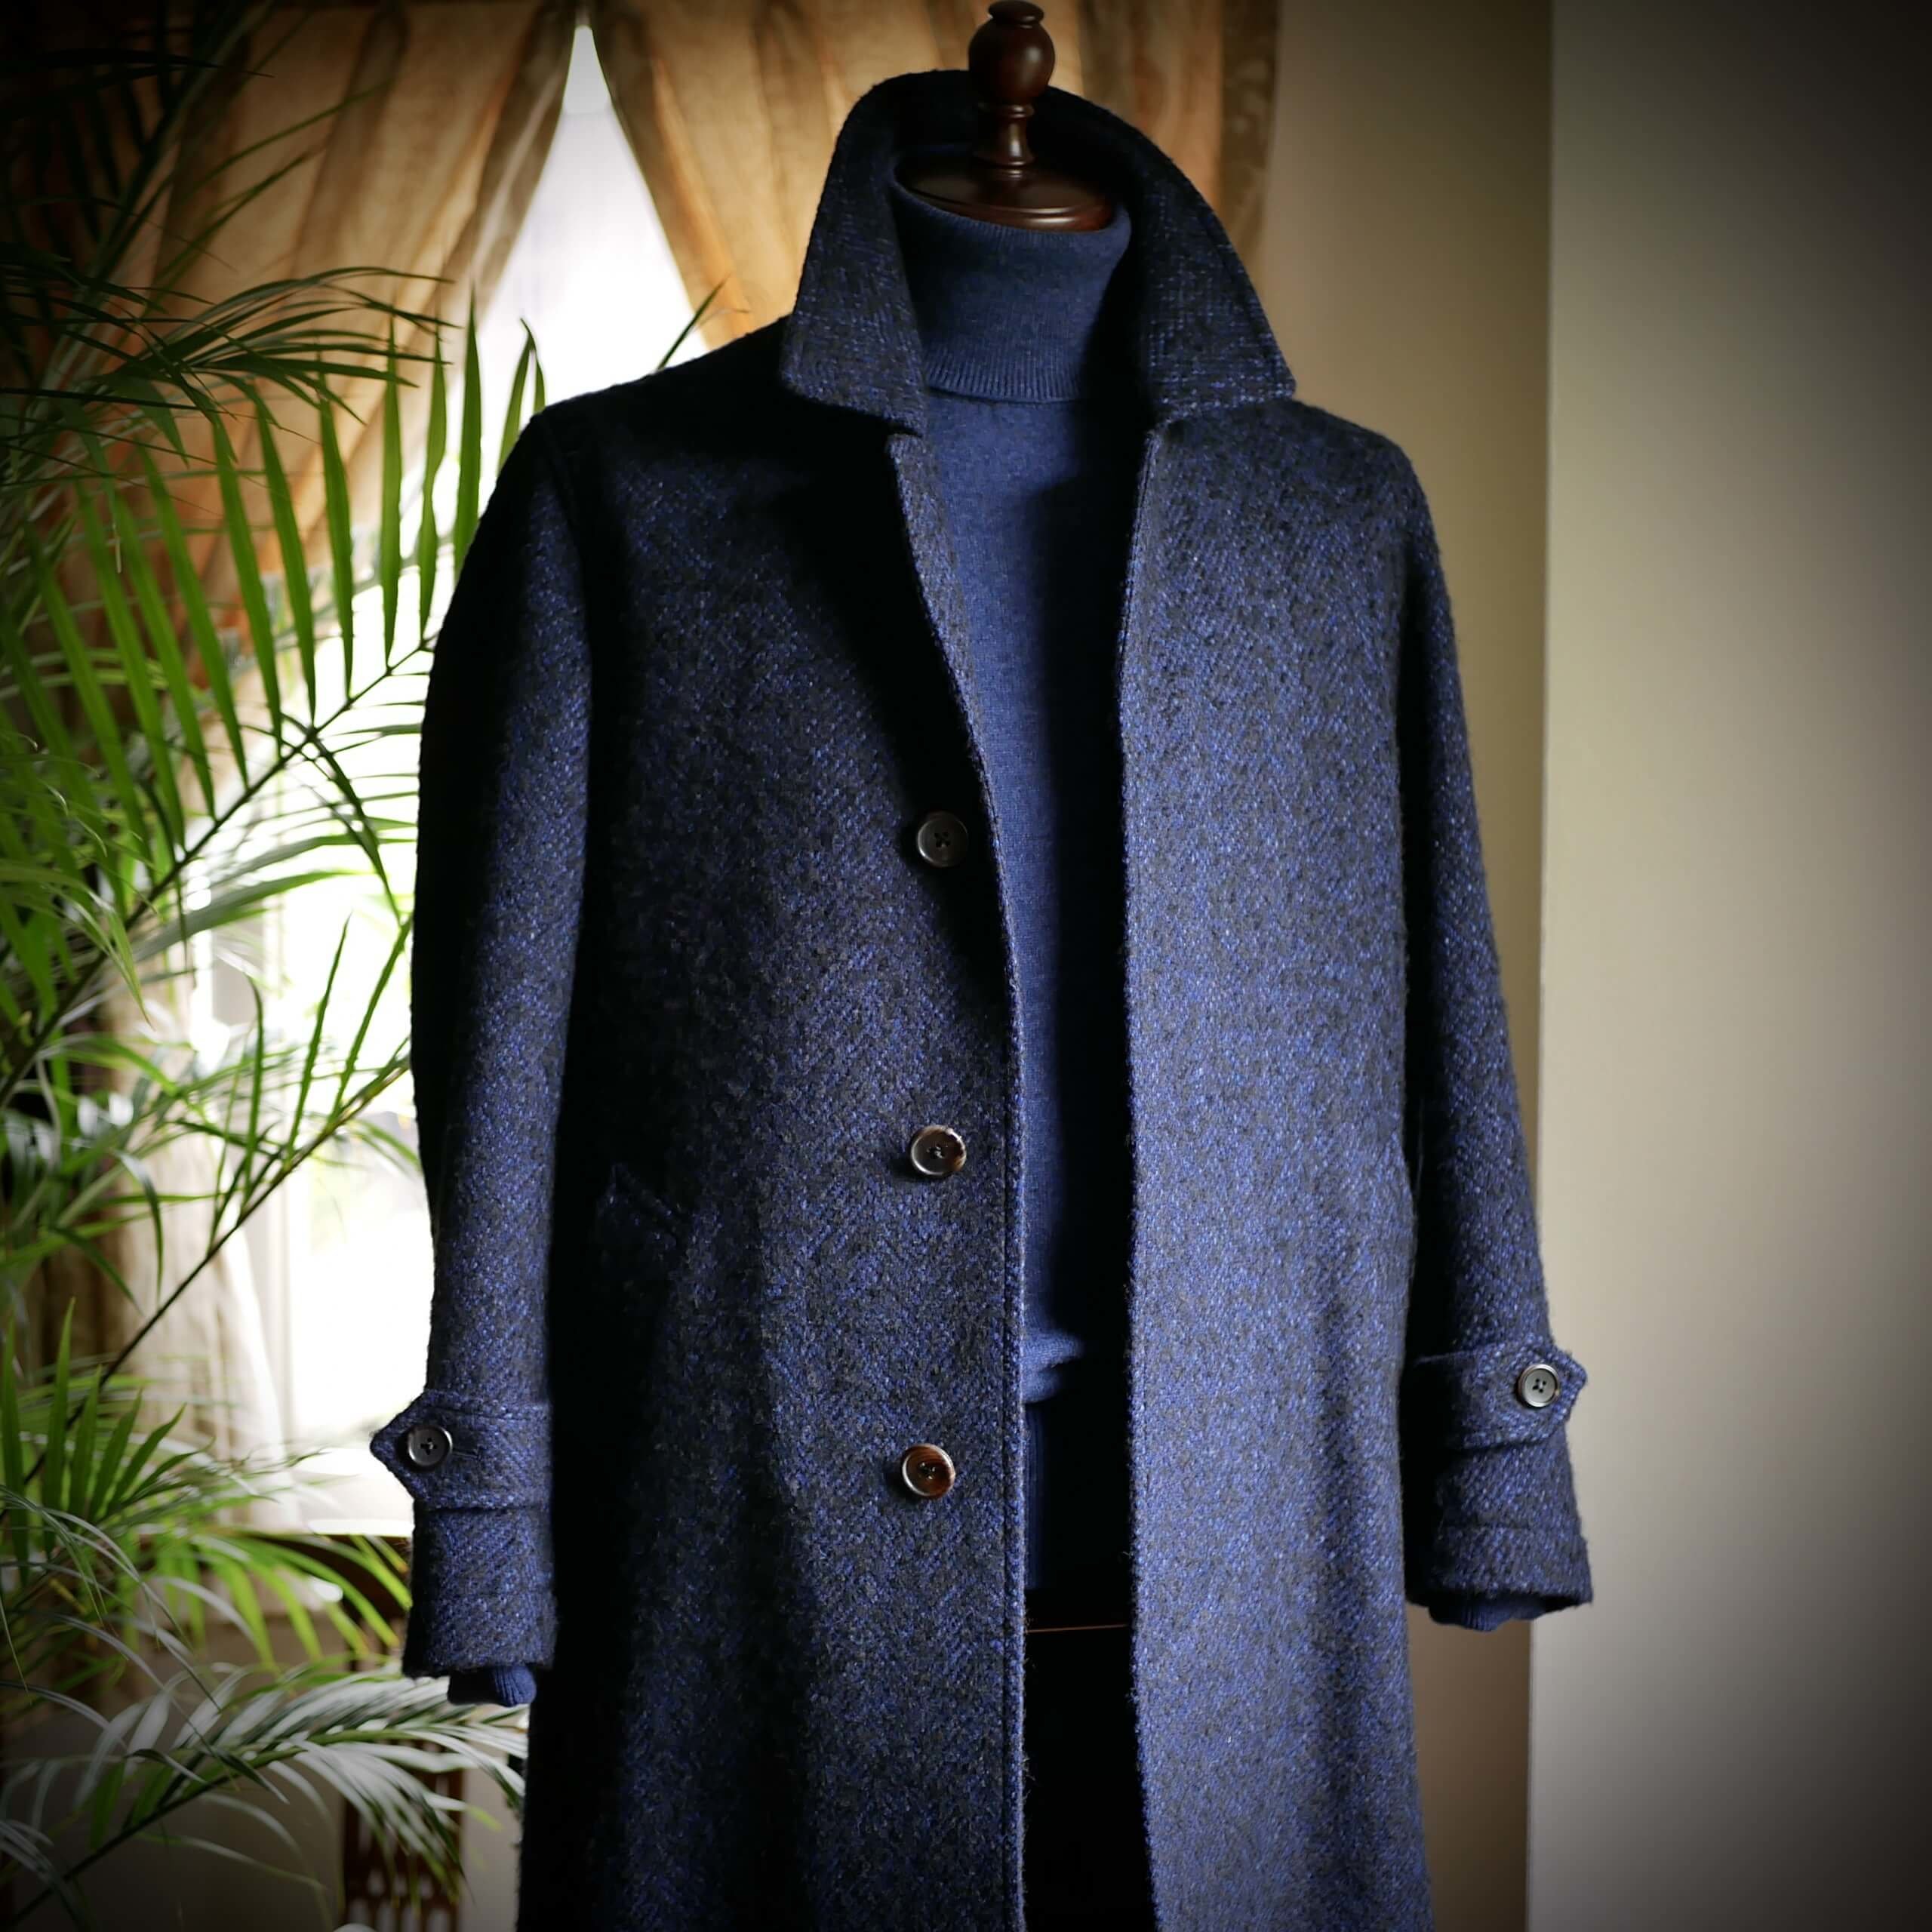 Overcoat_20210909_staincollar_coat_07.jpg